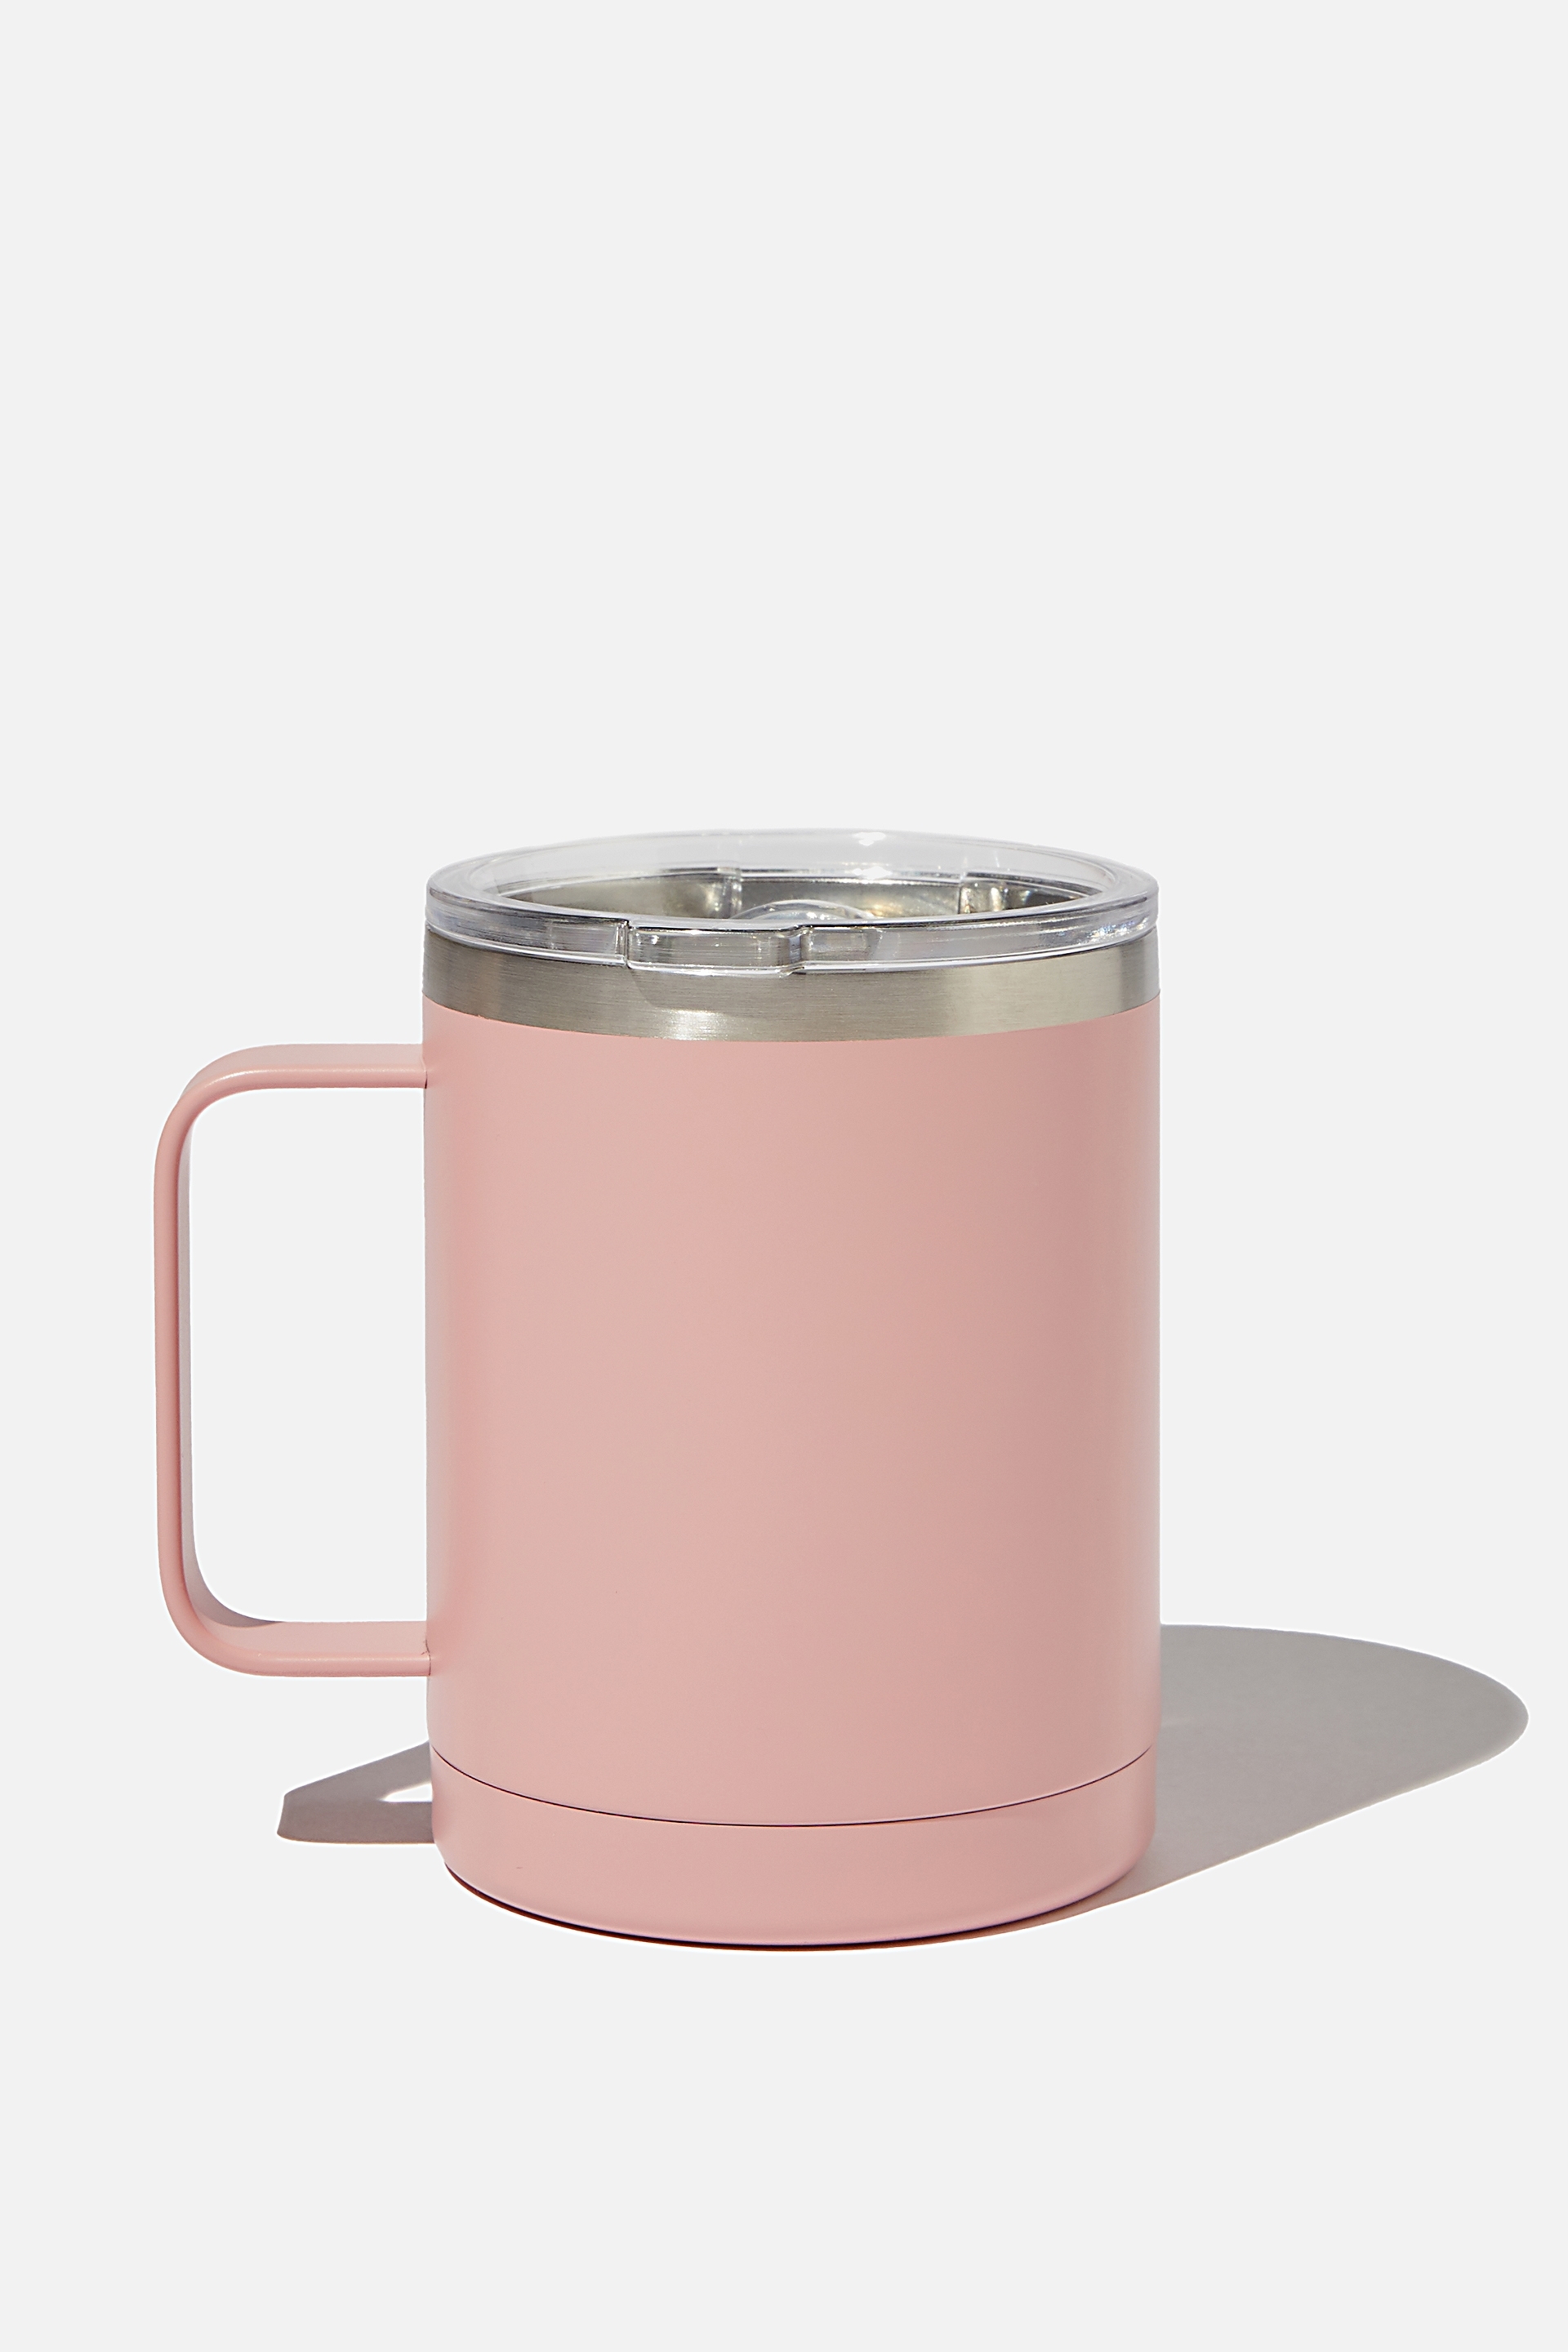 Cotton On Men - Stainless Steel Mug - Pale pink